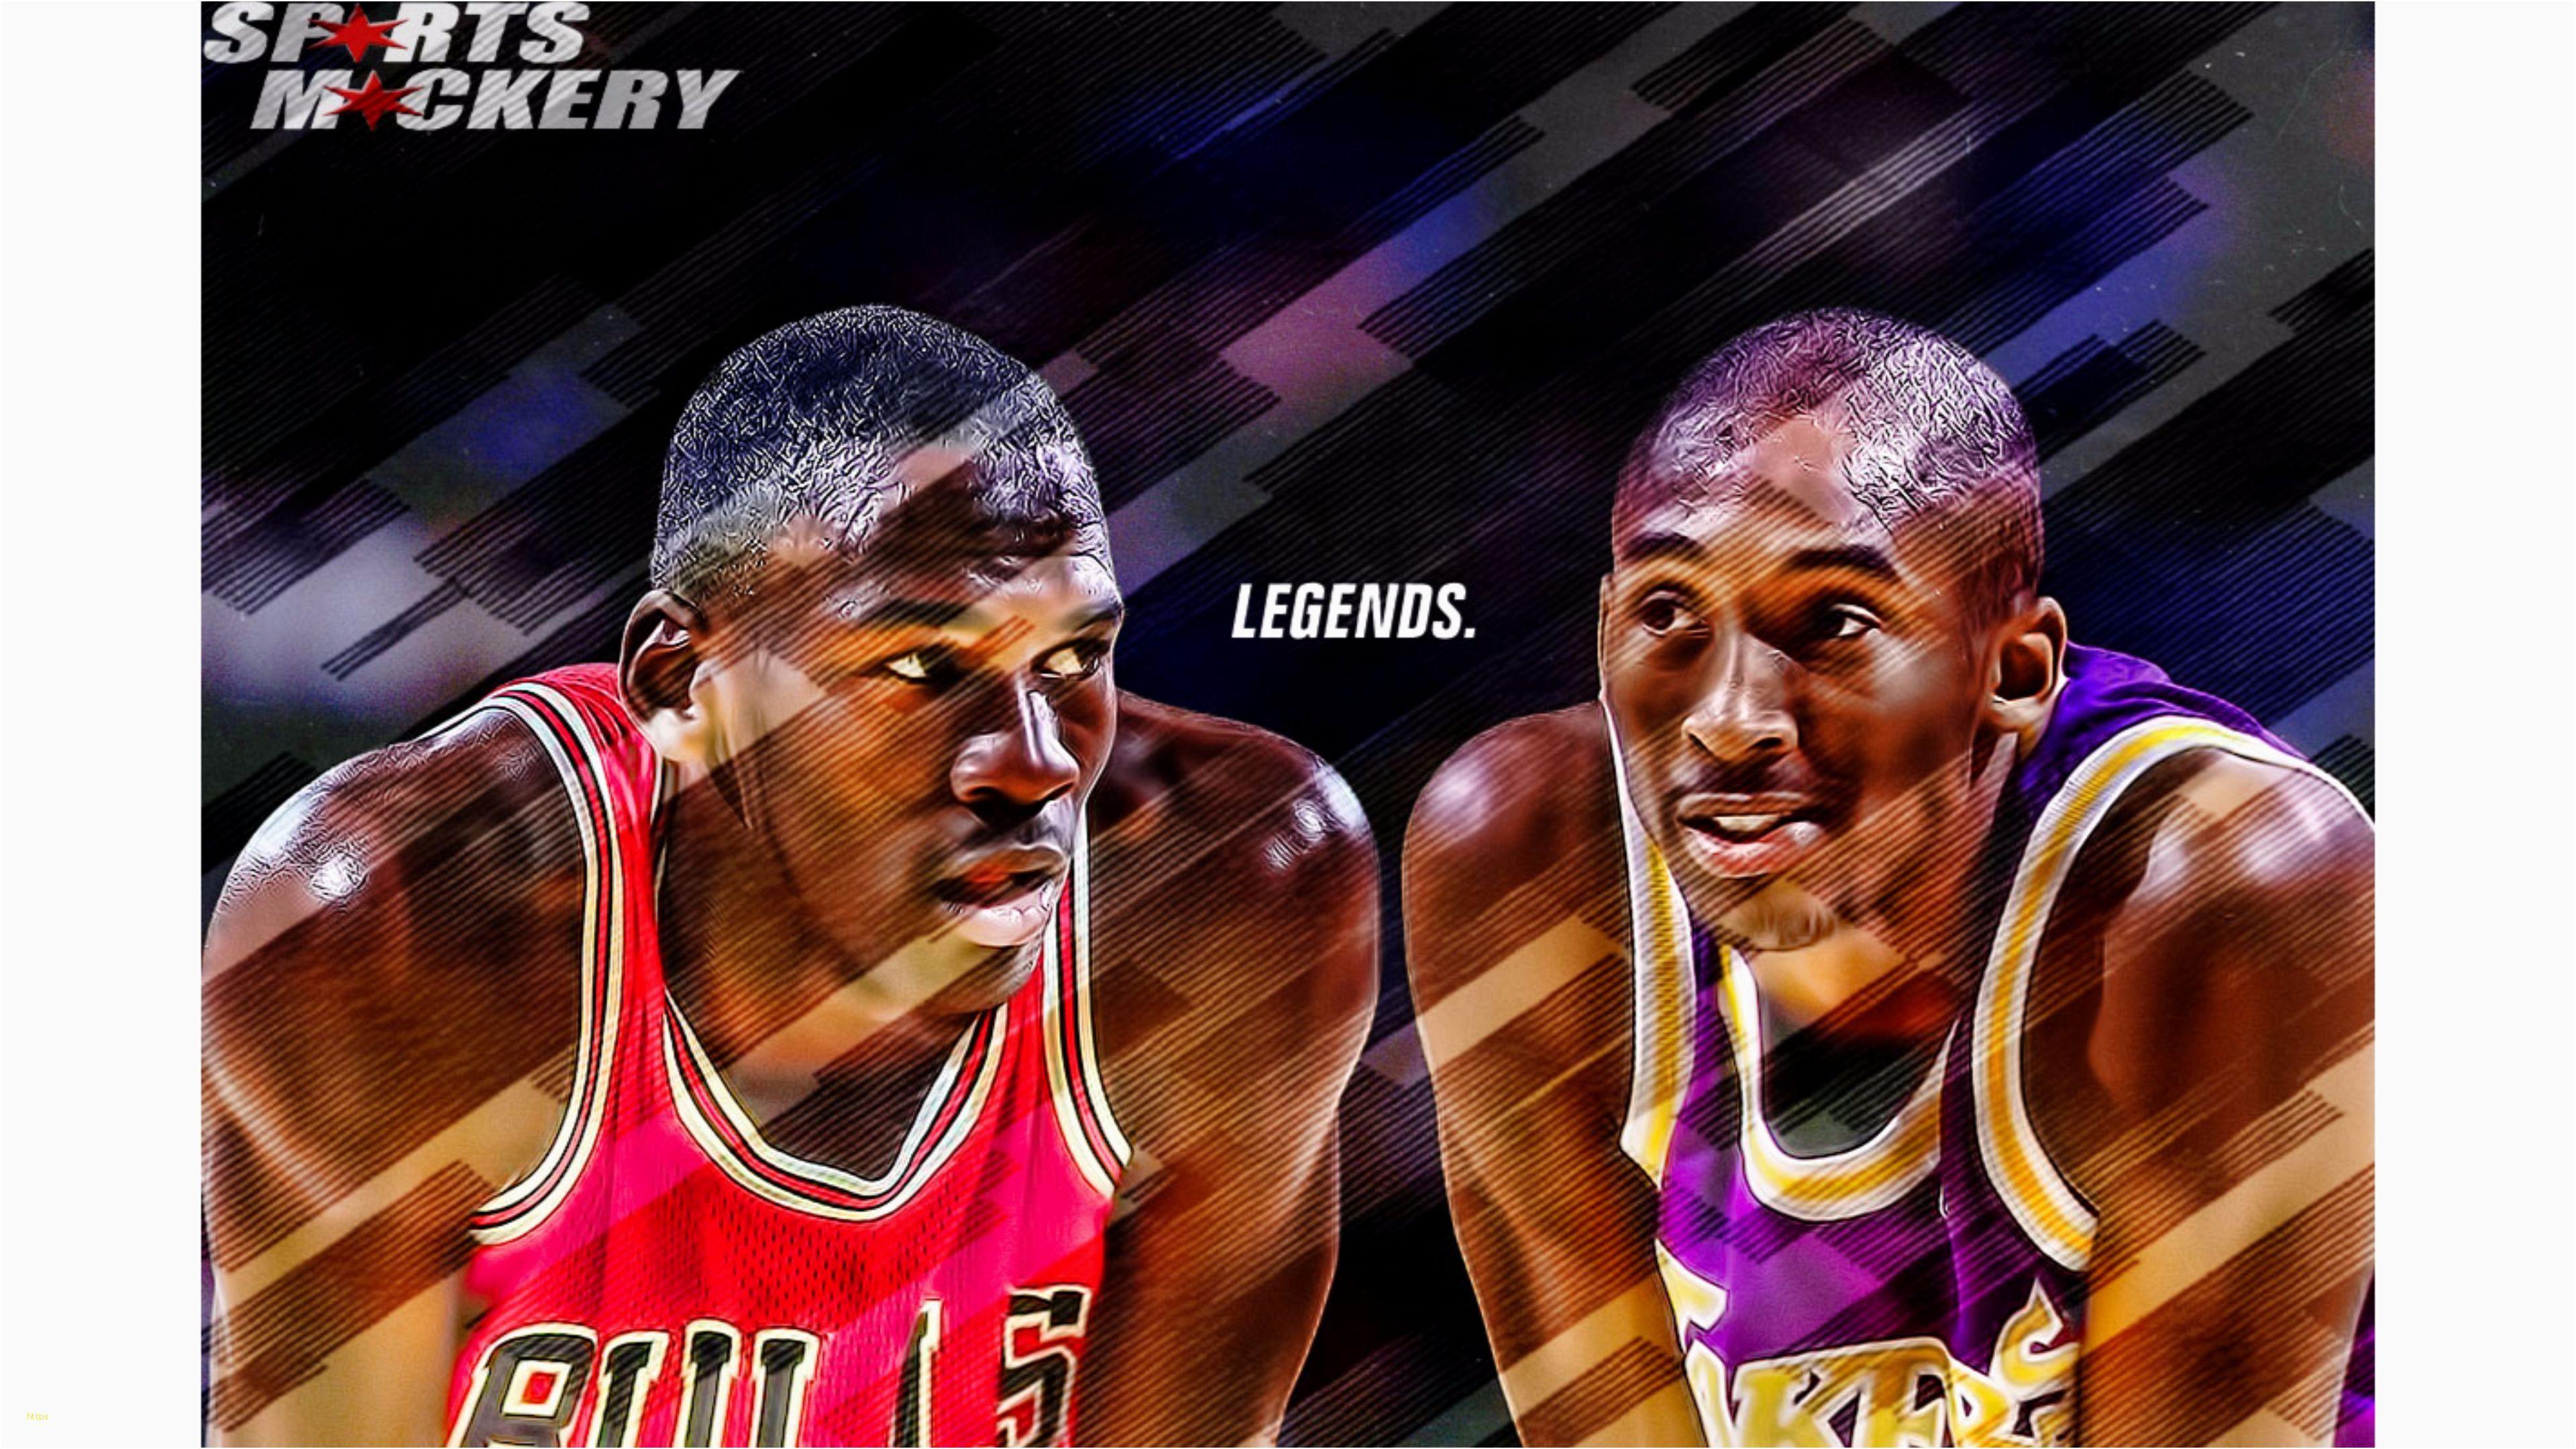 Michael Jordan Wallpaper Basketball Smile NBA Legends Kobe Bryant   Wallpaperforu